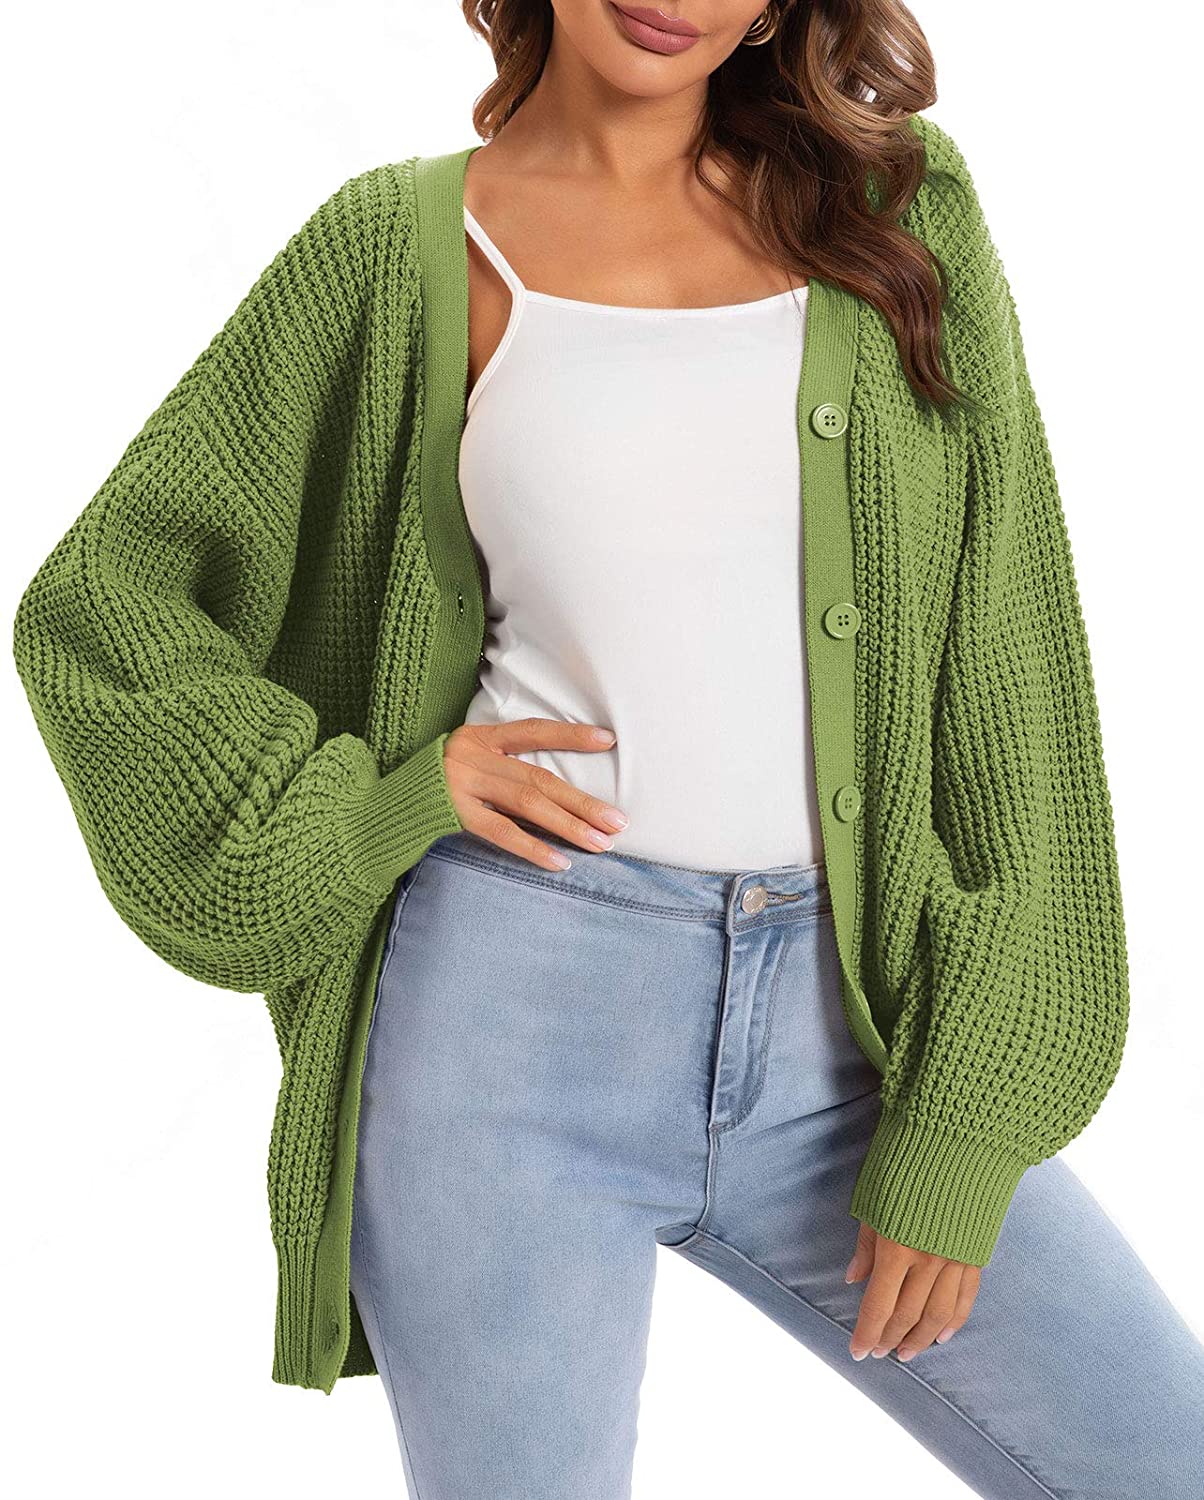 QUALFORT Women's Cardigan Sweater 100% Cotton Button-Down